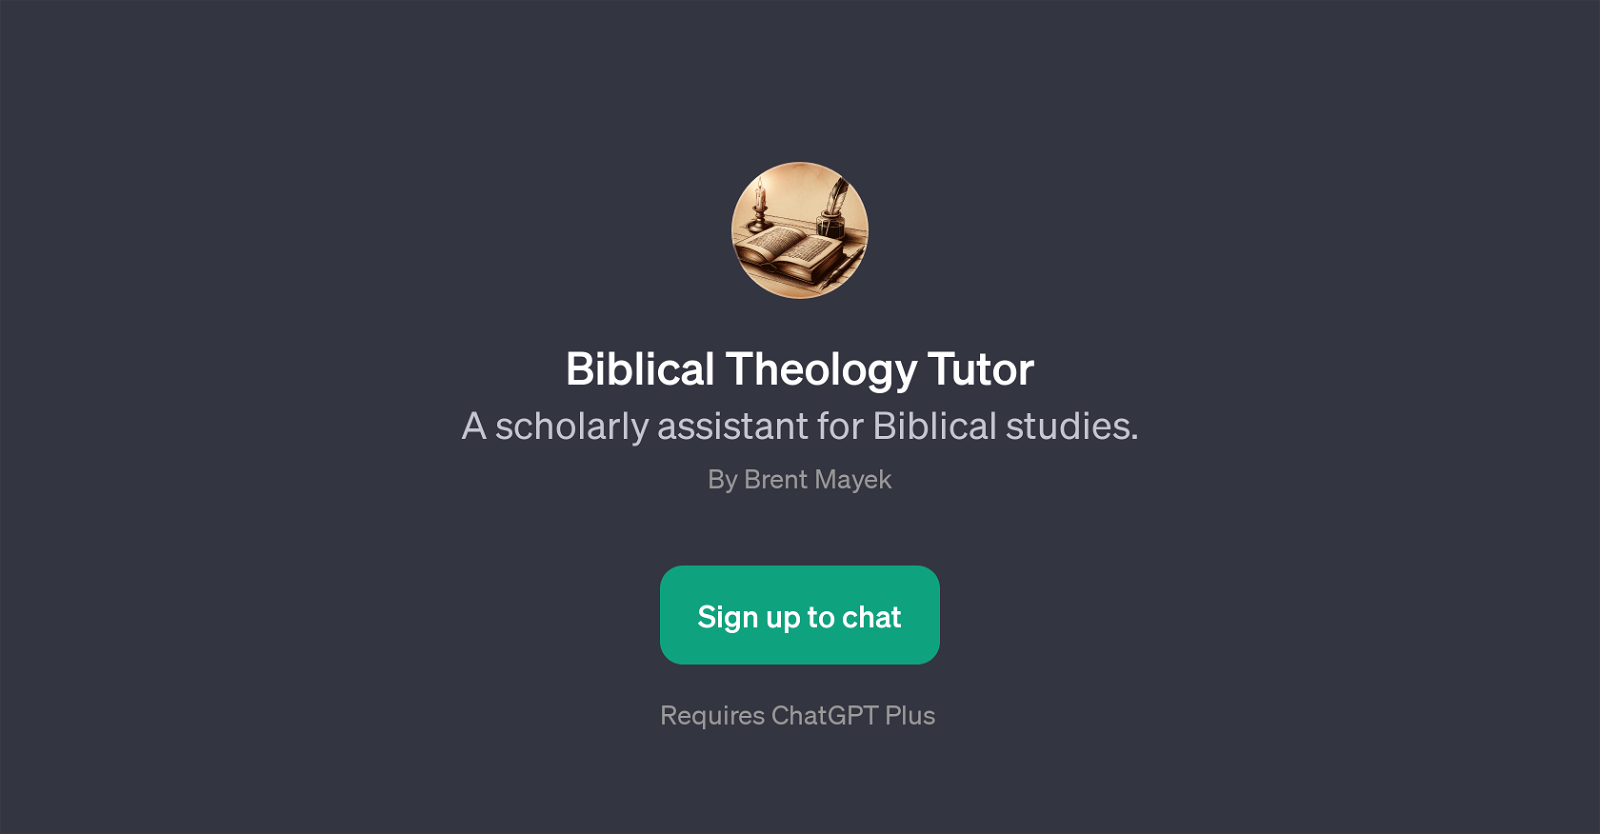 Biblical Theology Tutor website